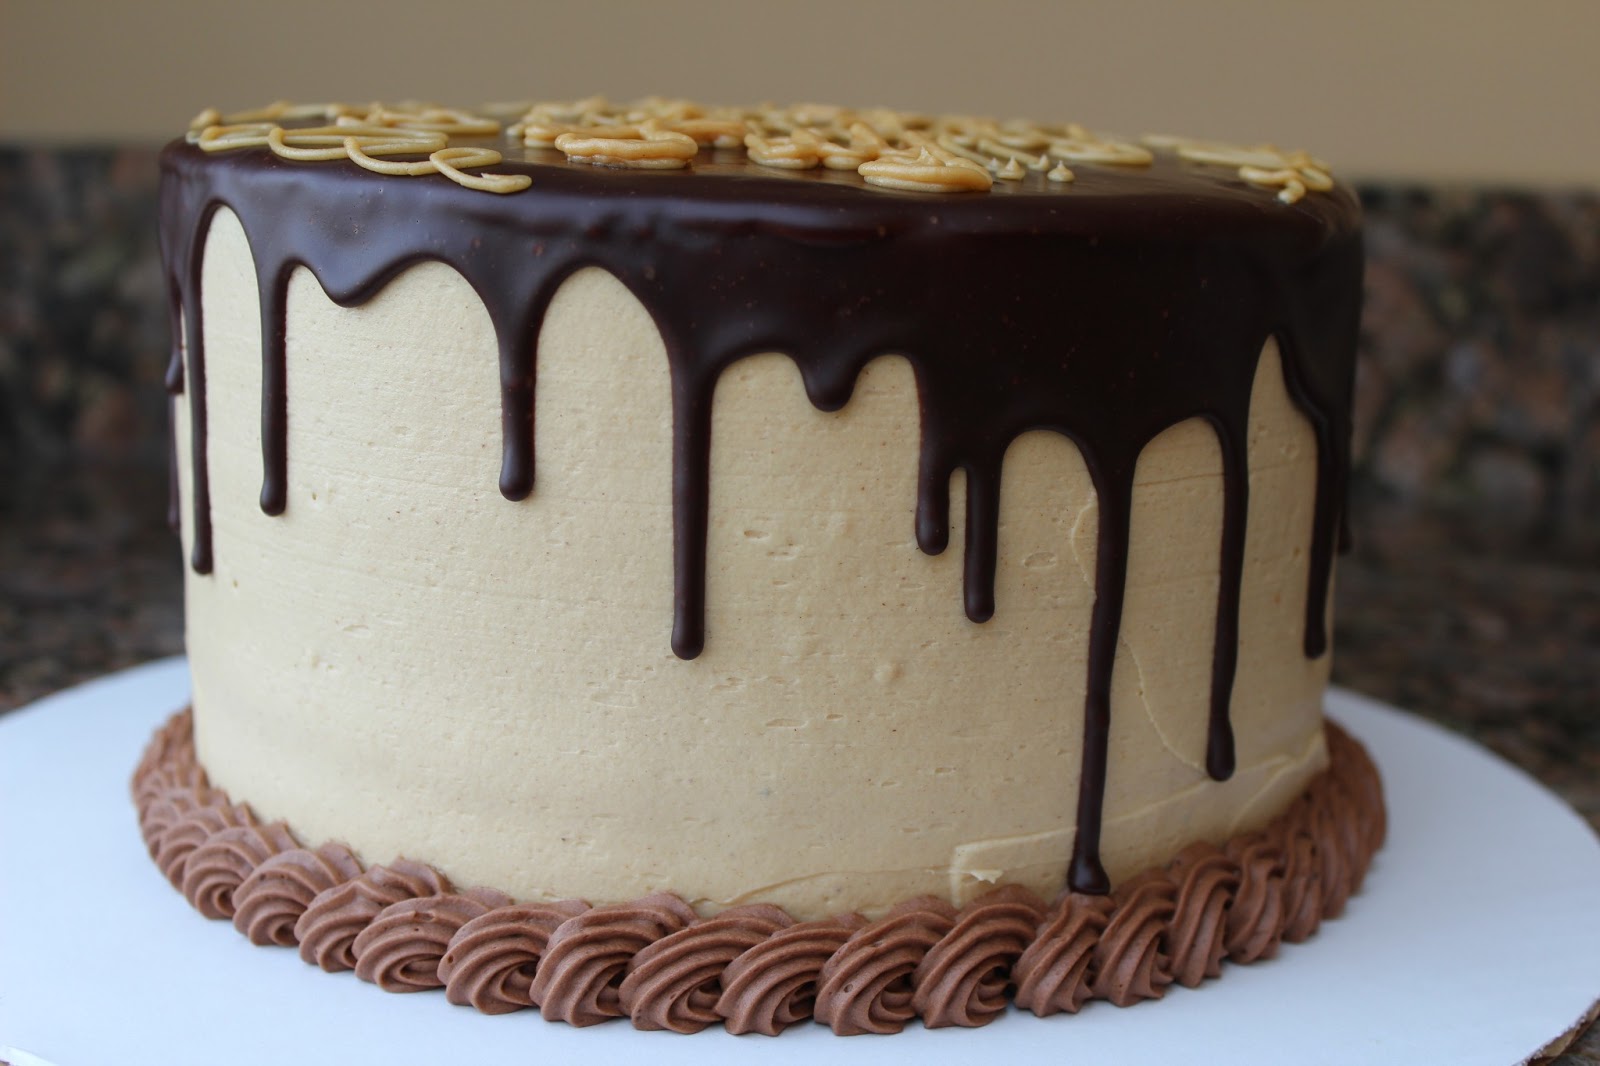 Hanna S Desserts Chocolate Peanut Butter Ganache Cake